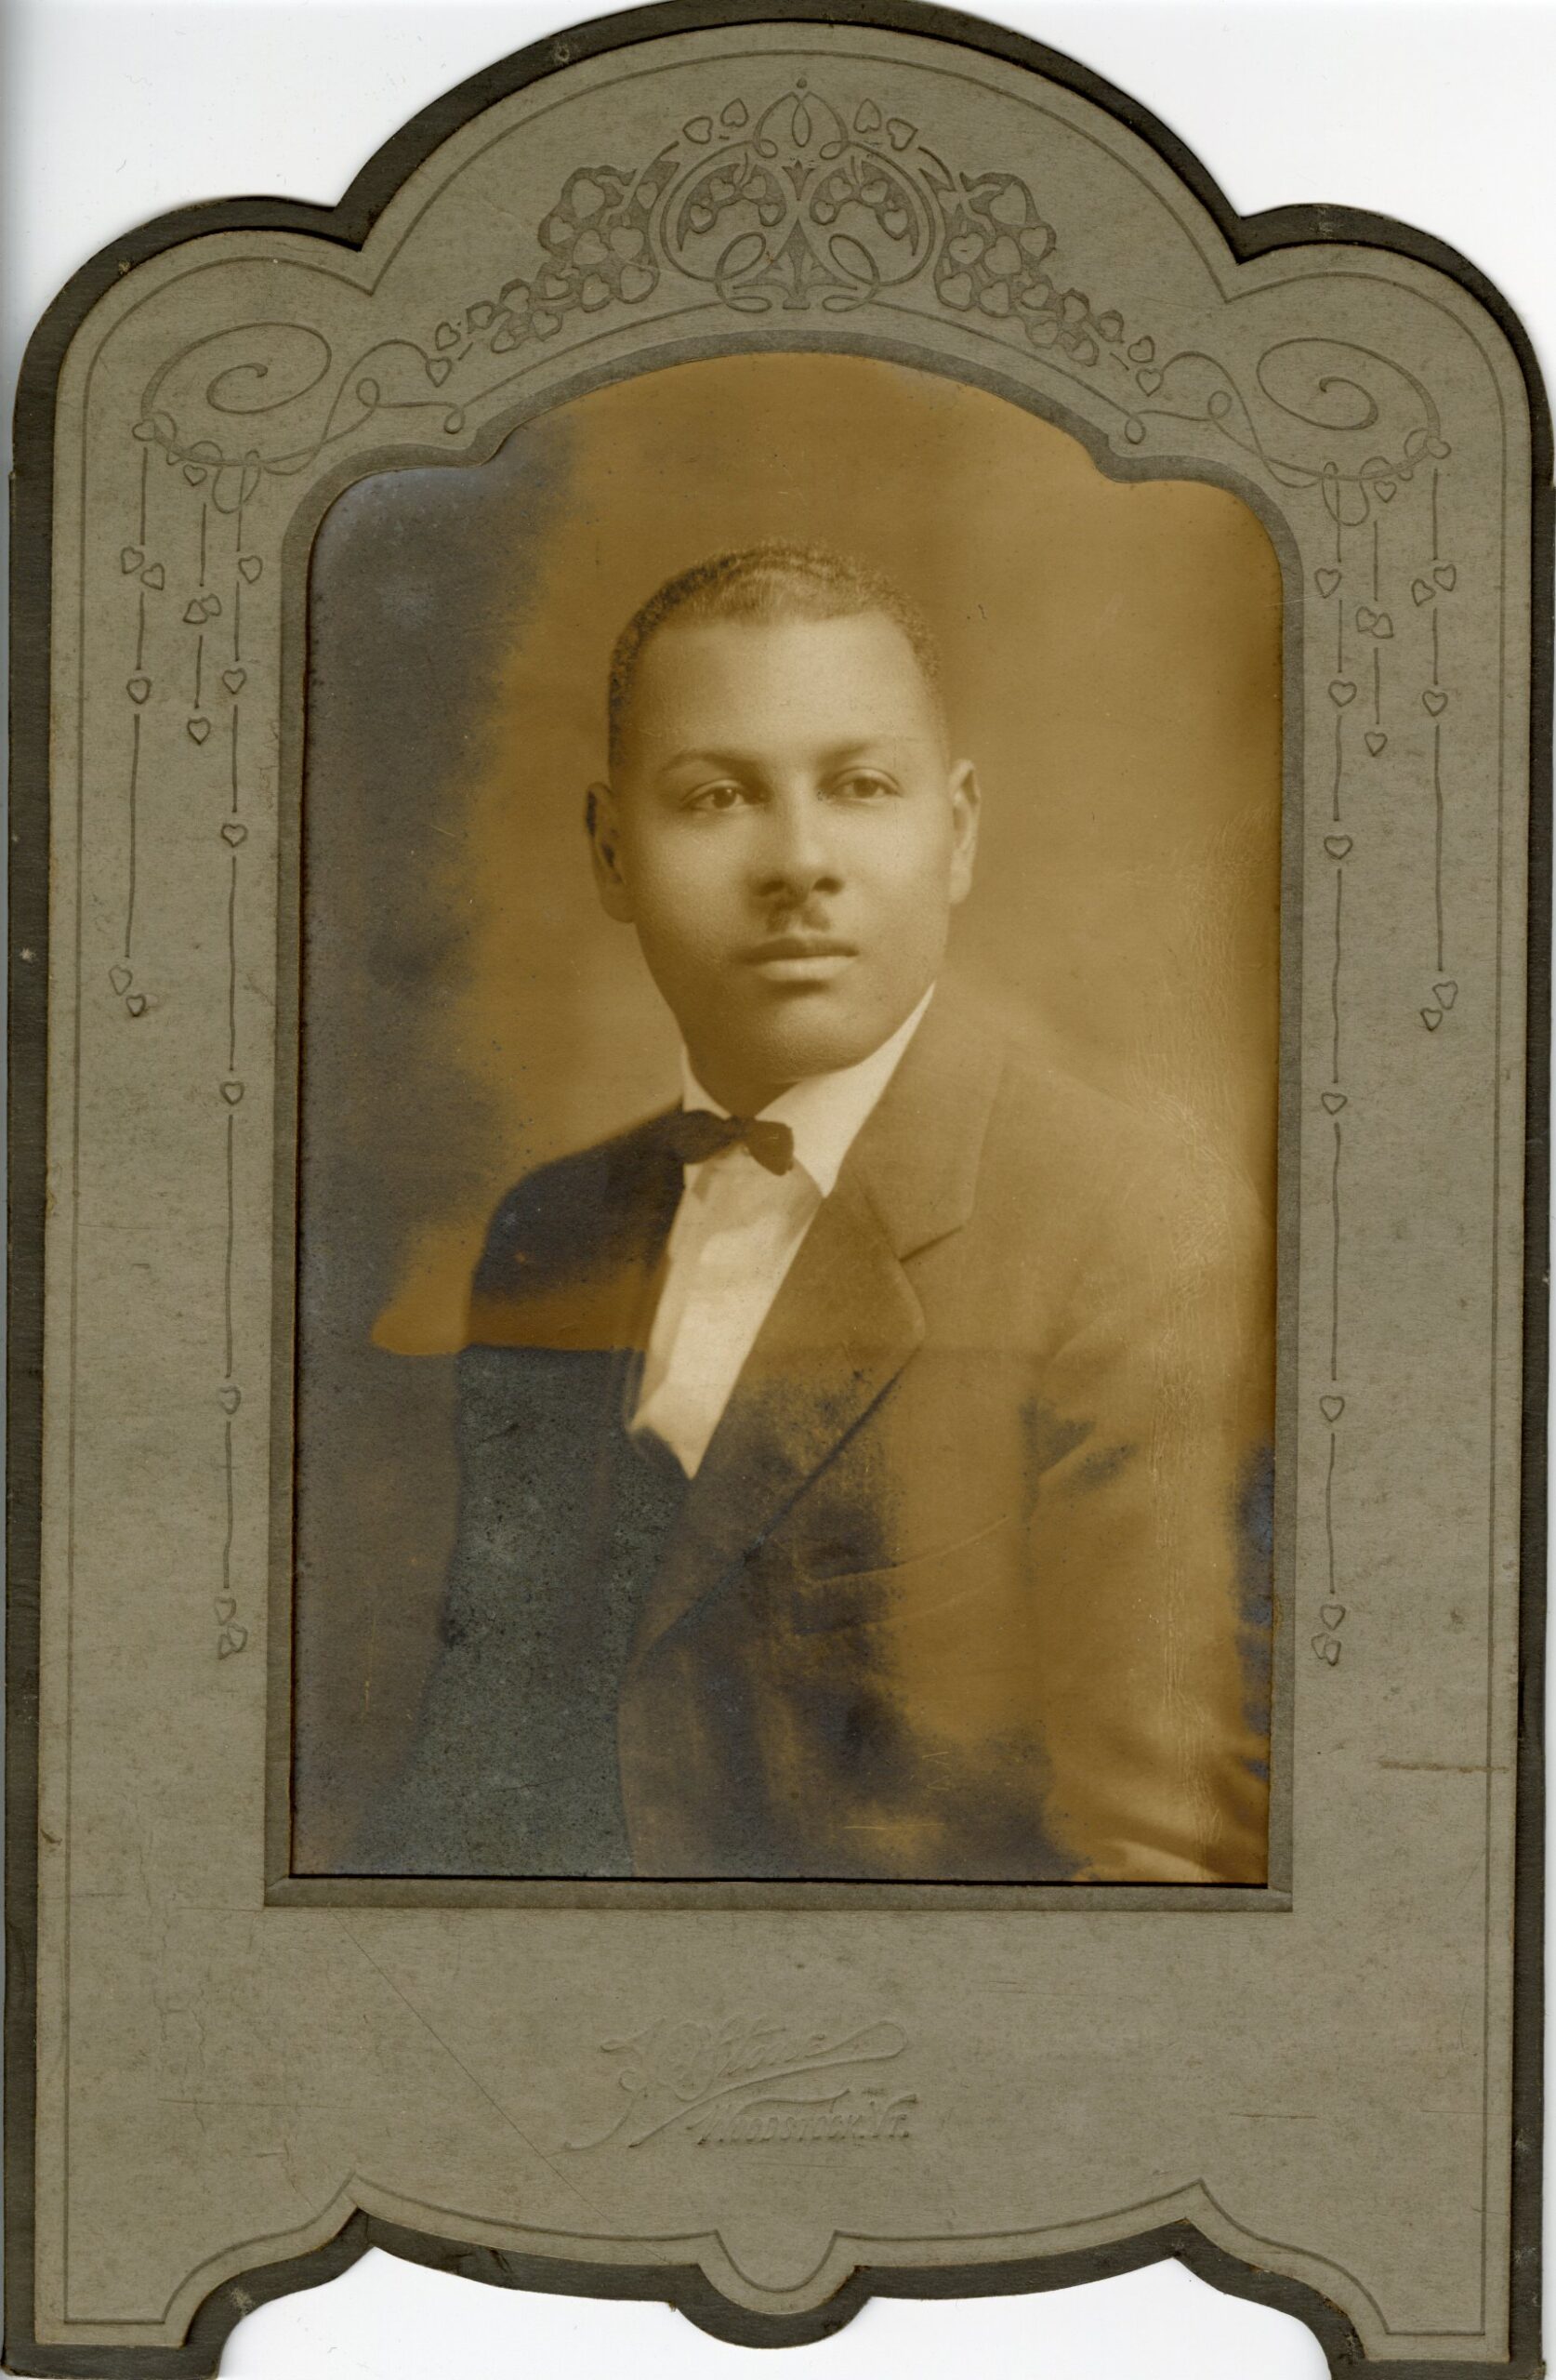 Studio portrait of a young Black man in a suit.